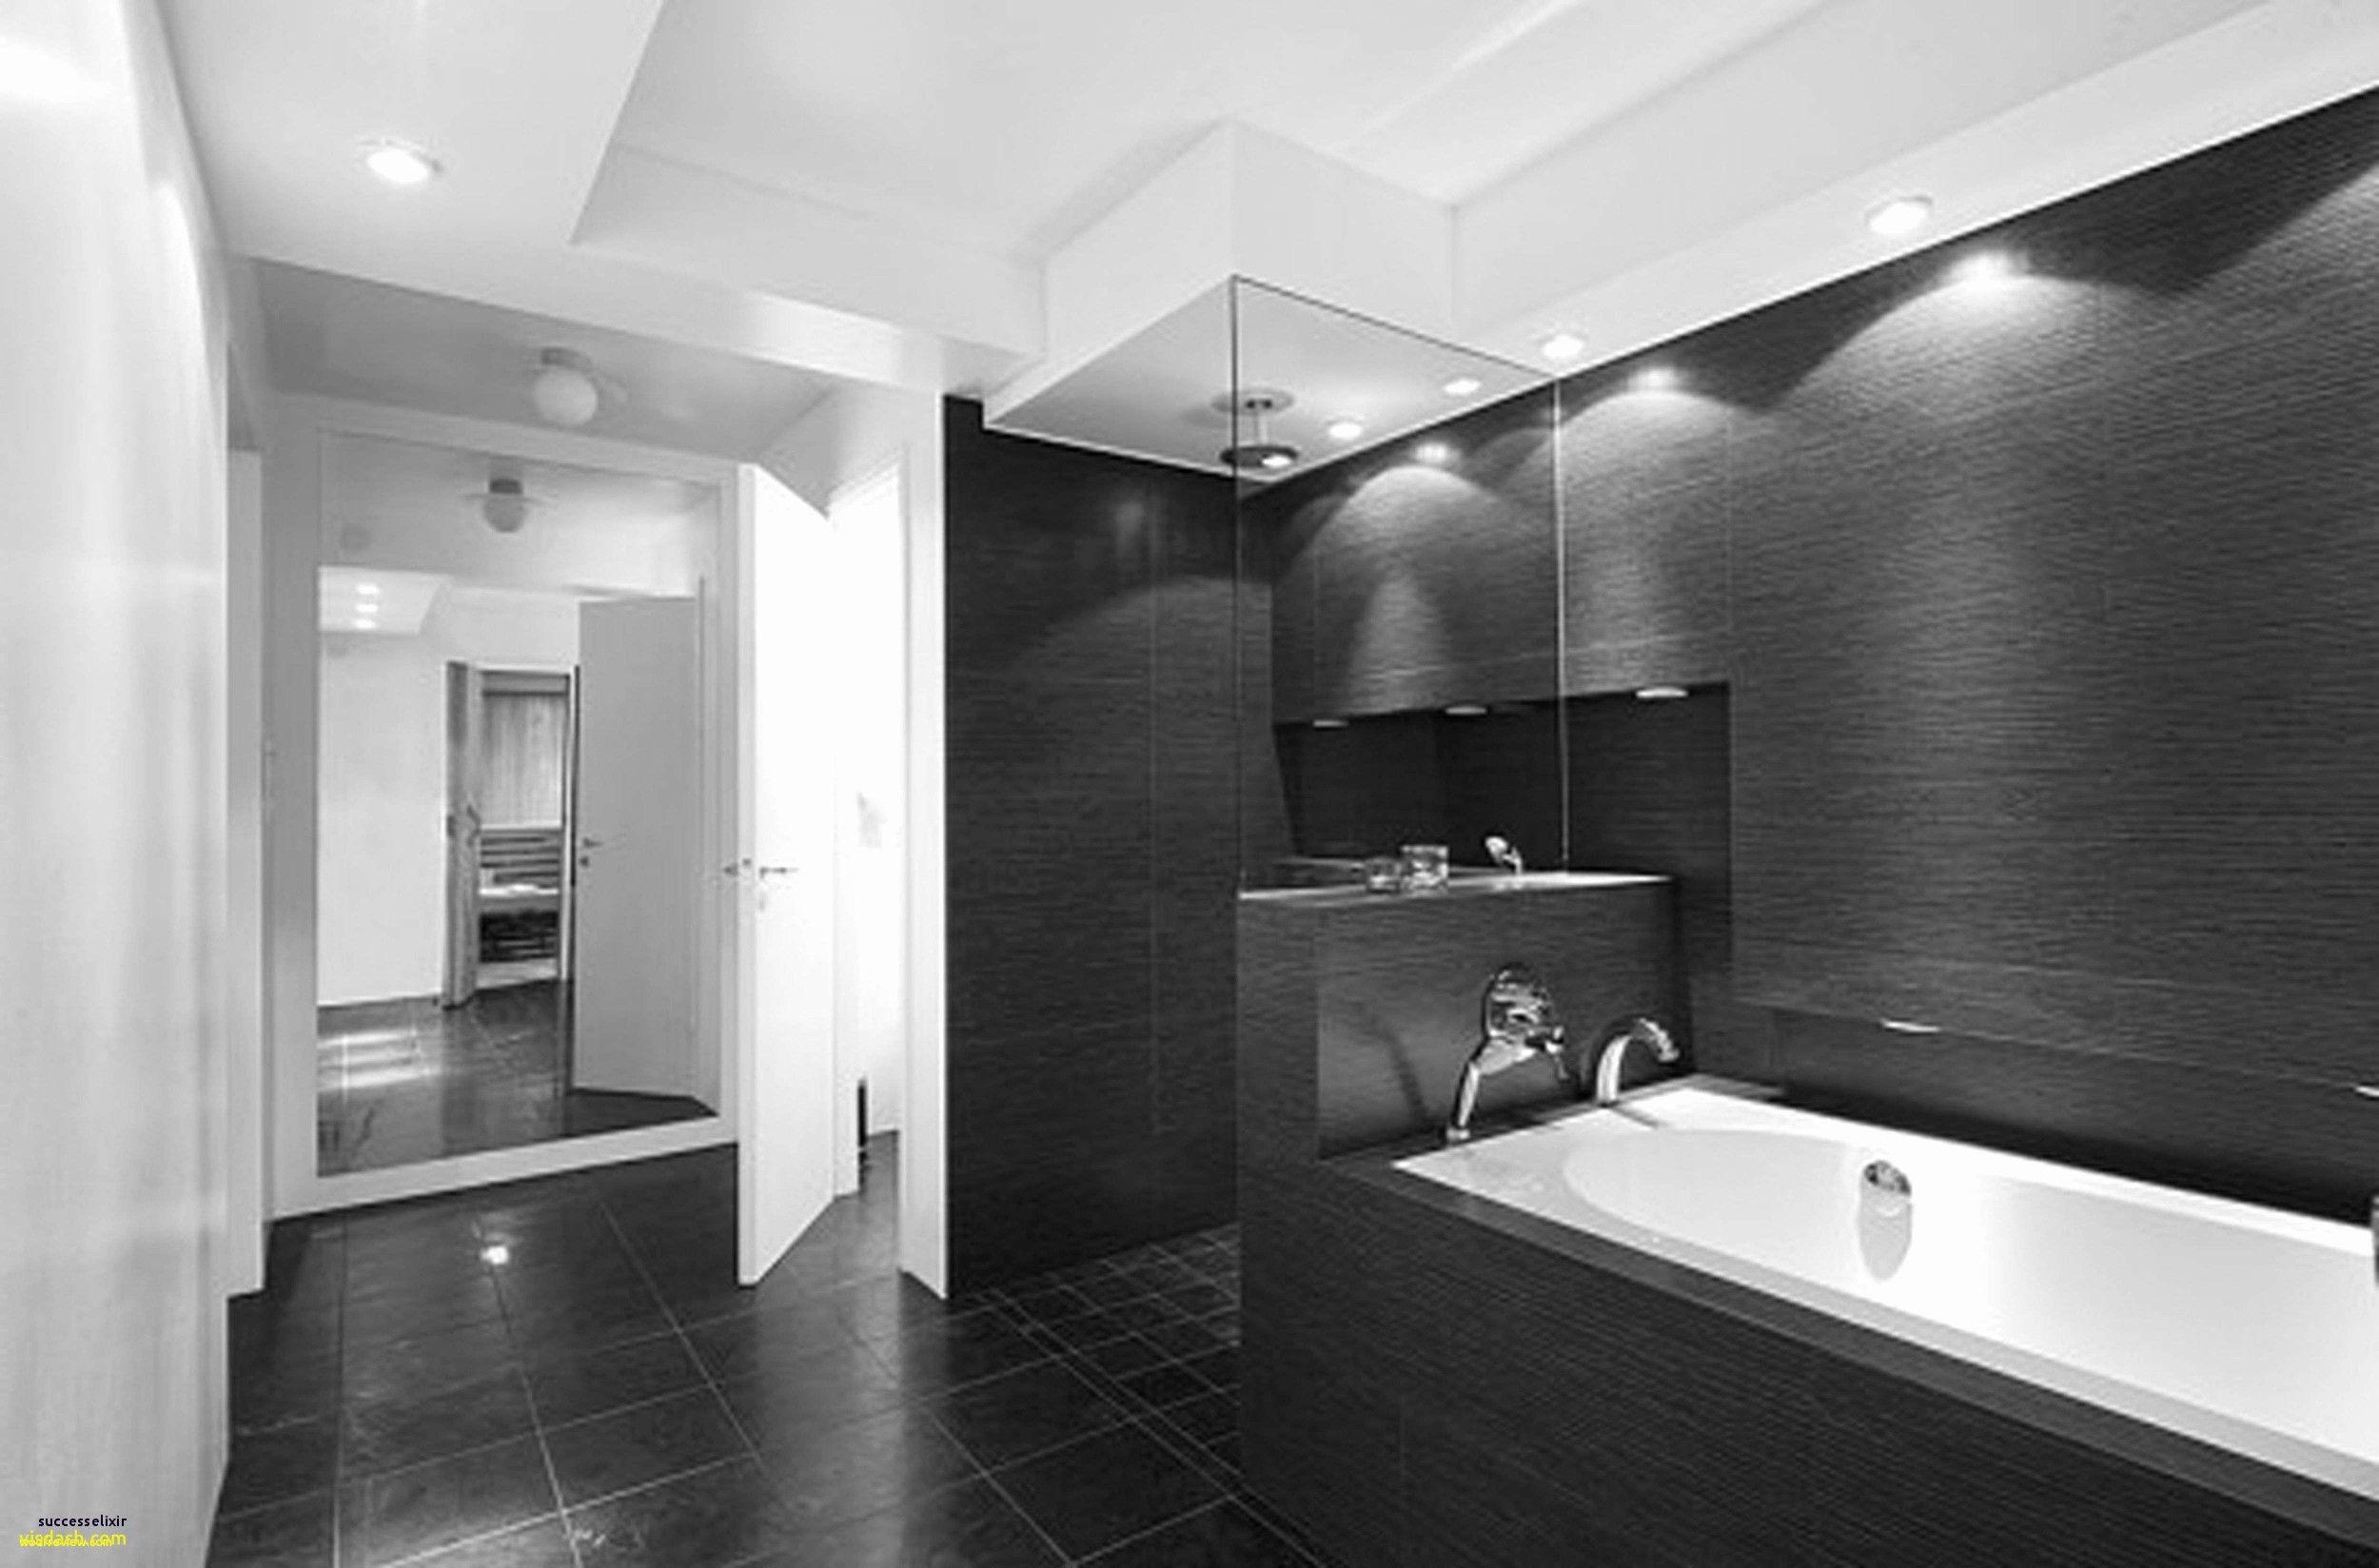 Black Hardwood Flooring Lowes Of astonishing Wood Tile In Bathroom or Lowes Kitchen Tiles Fresh Lowes Throughout Wood Tile In Bathroom Lovely Wood Tile In Bathroom with 15 the Best Grey Bathroom